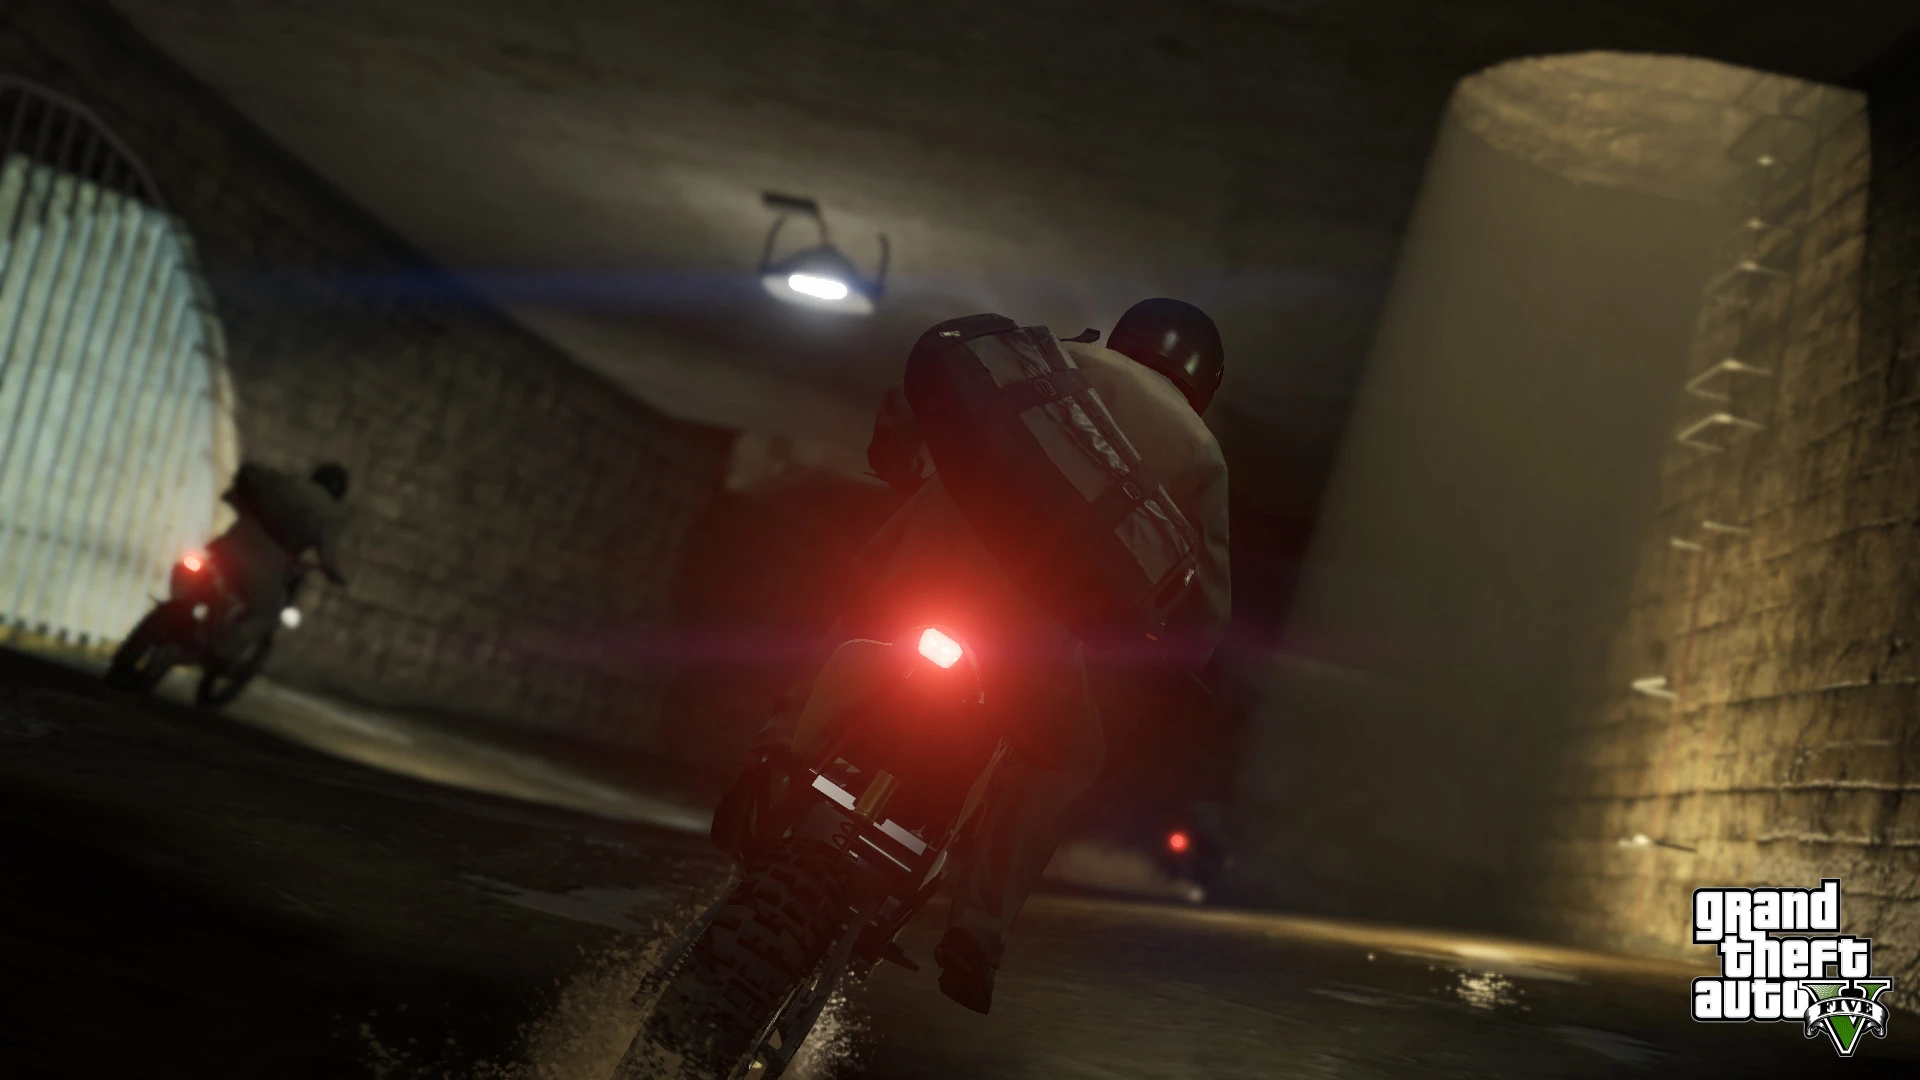 Grand Theft Auto V - PS4 Screenshot 11 - Moto